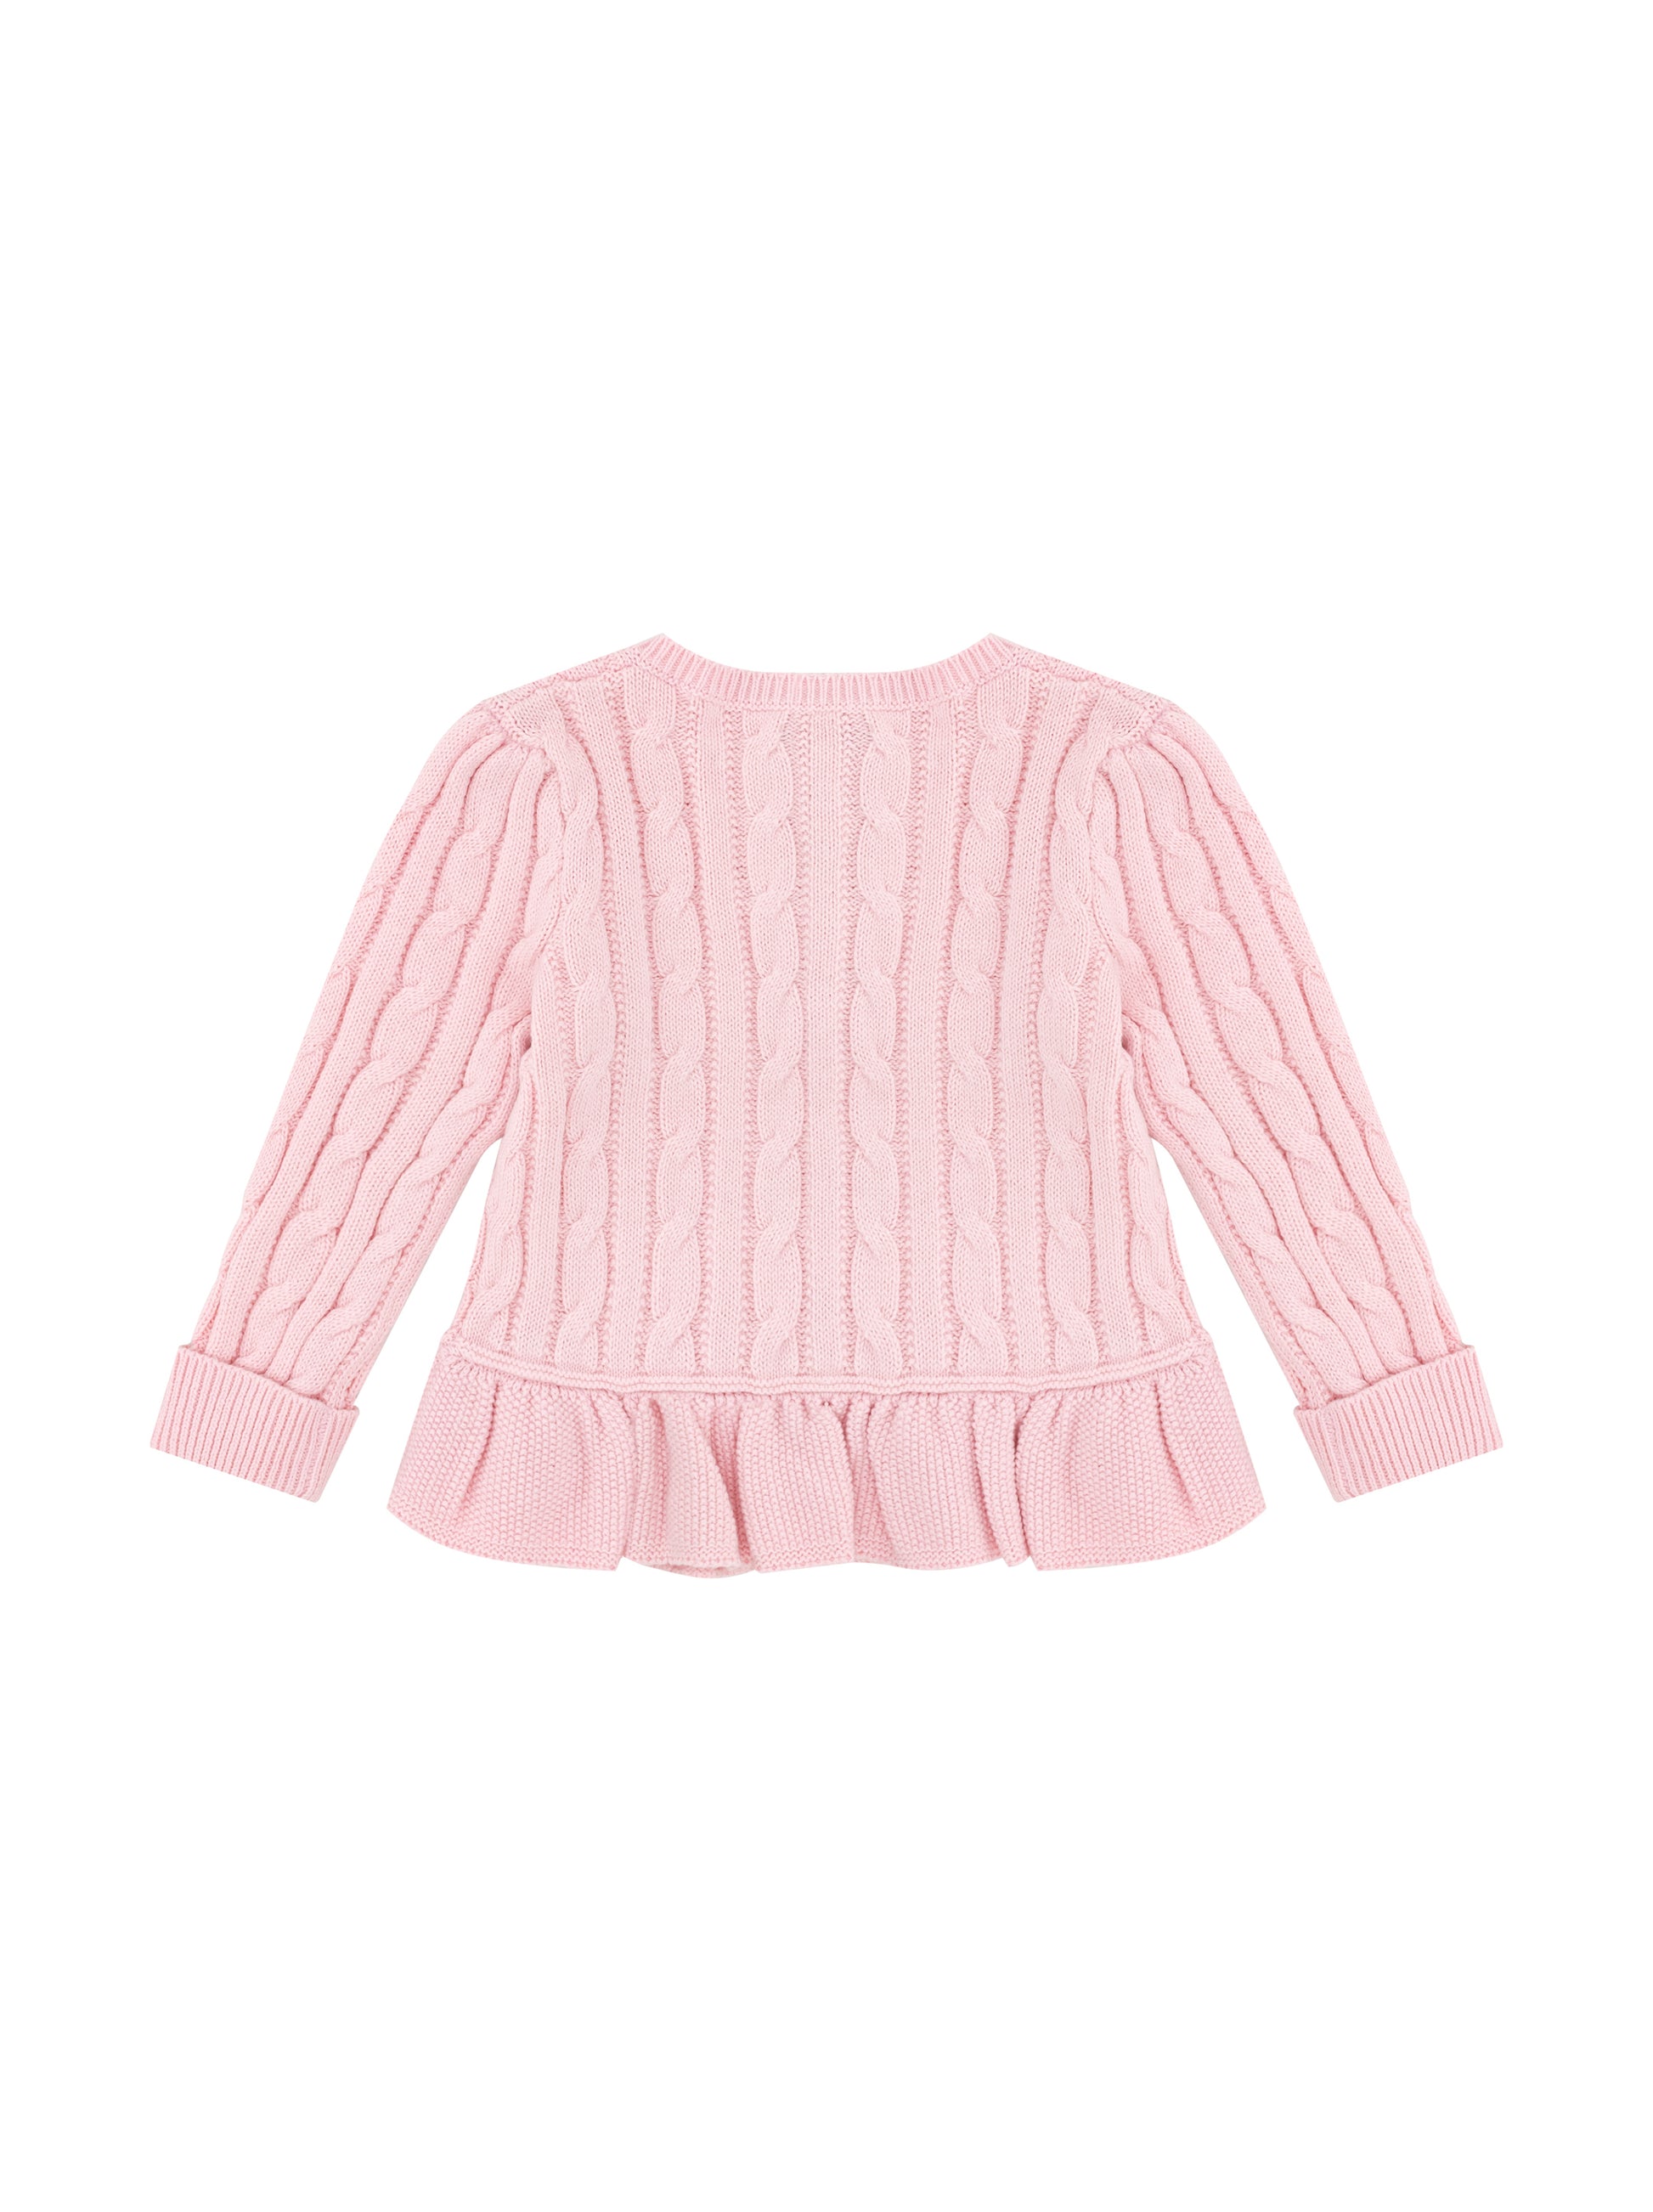 Ralph Lauren, Cardigans, Ralph Lauren - Baby Knitted Cardigan, Pink